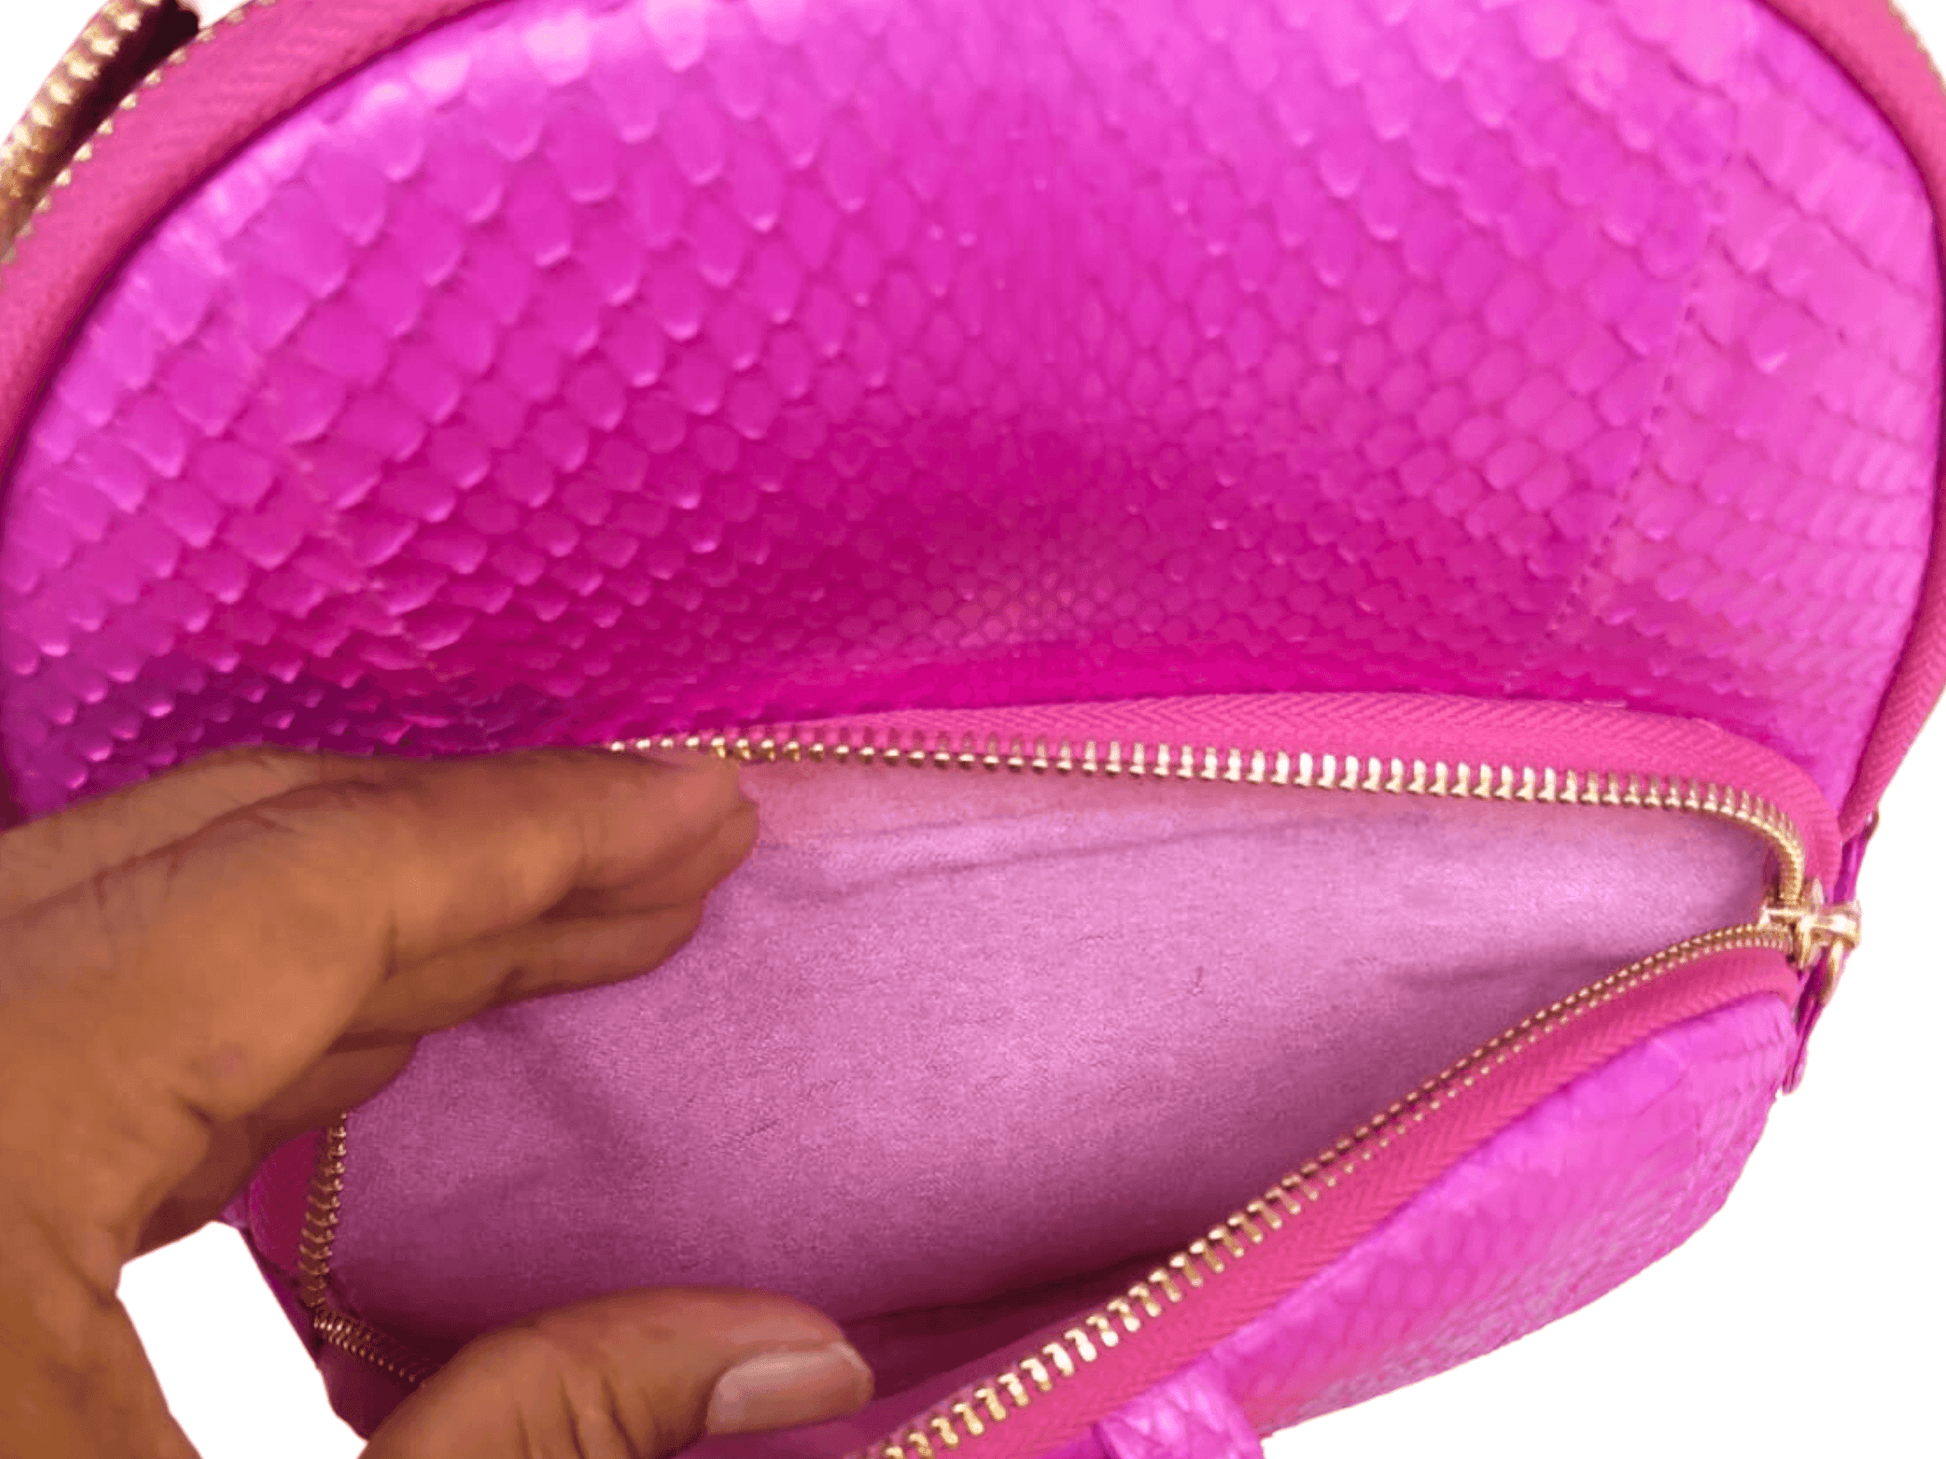 Mini Backpack Snakeskin Purse Python Jacket by LFM Fashion